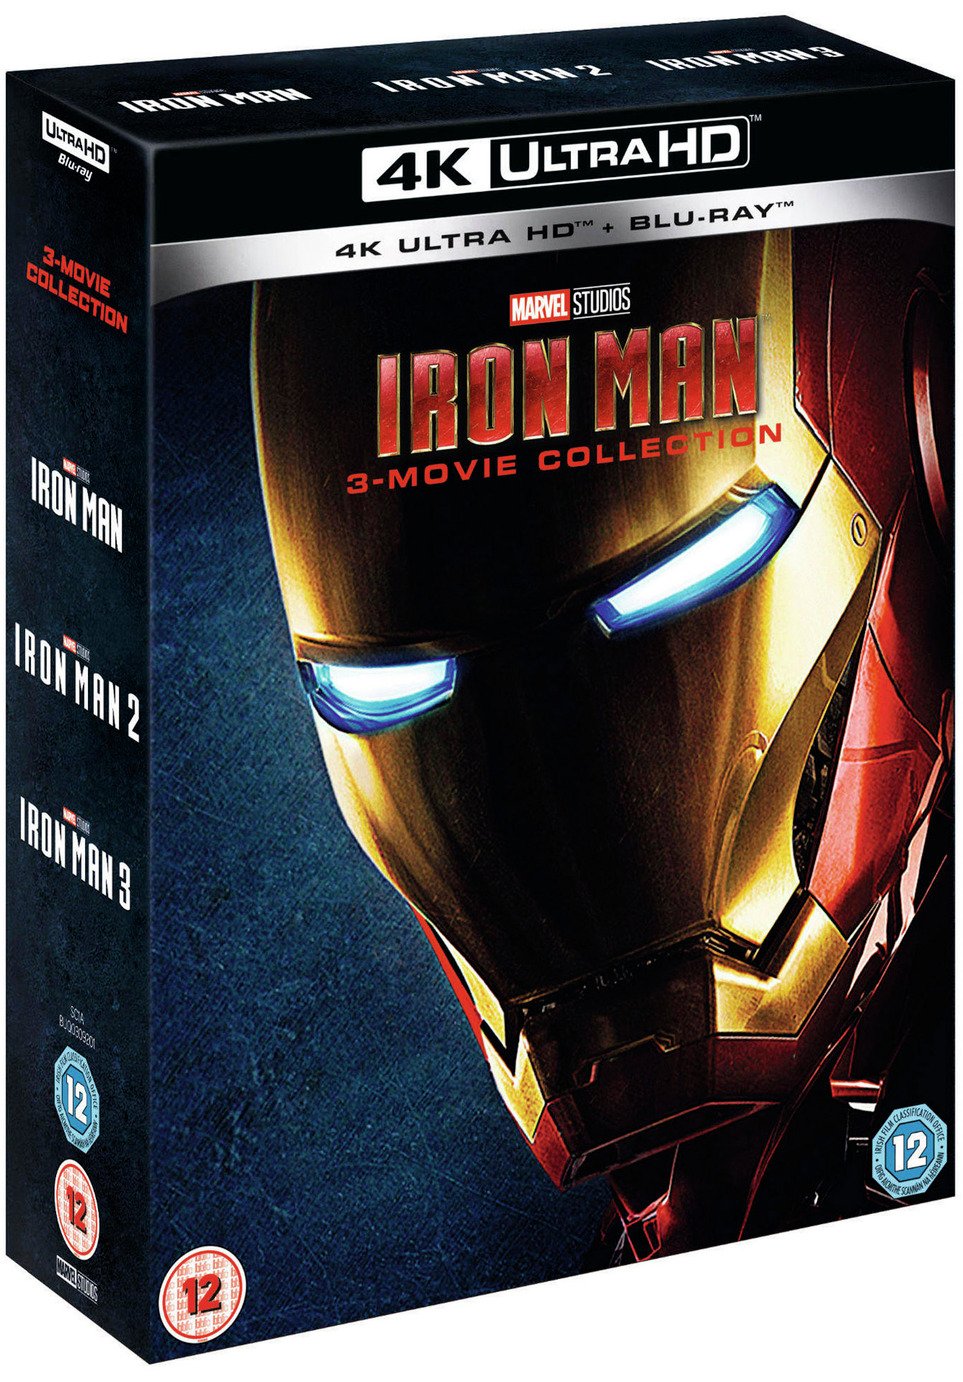 Iron Man Trilogy 4K UHD Blu-Ray Box Set